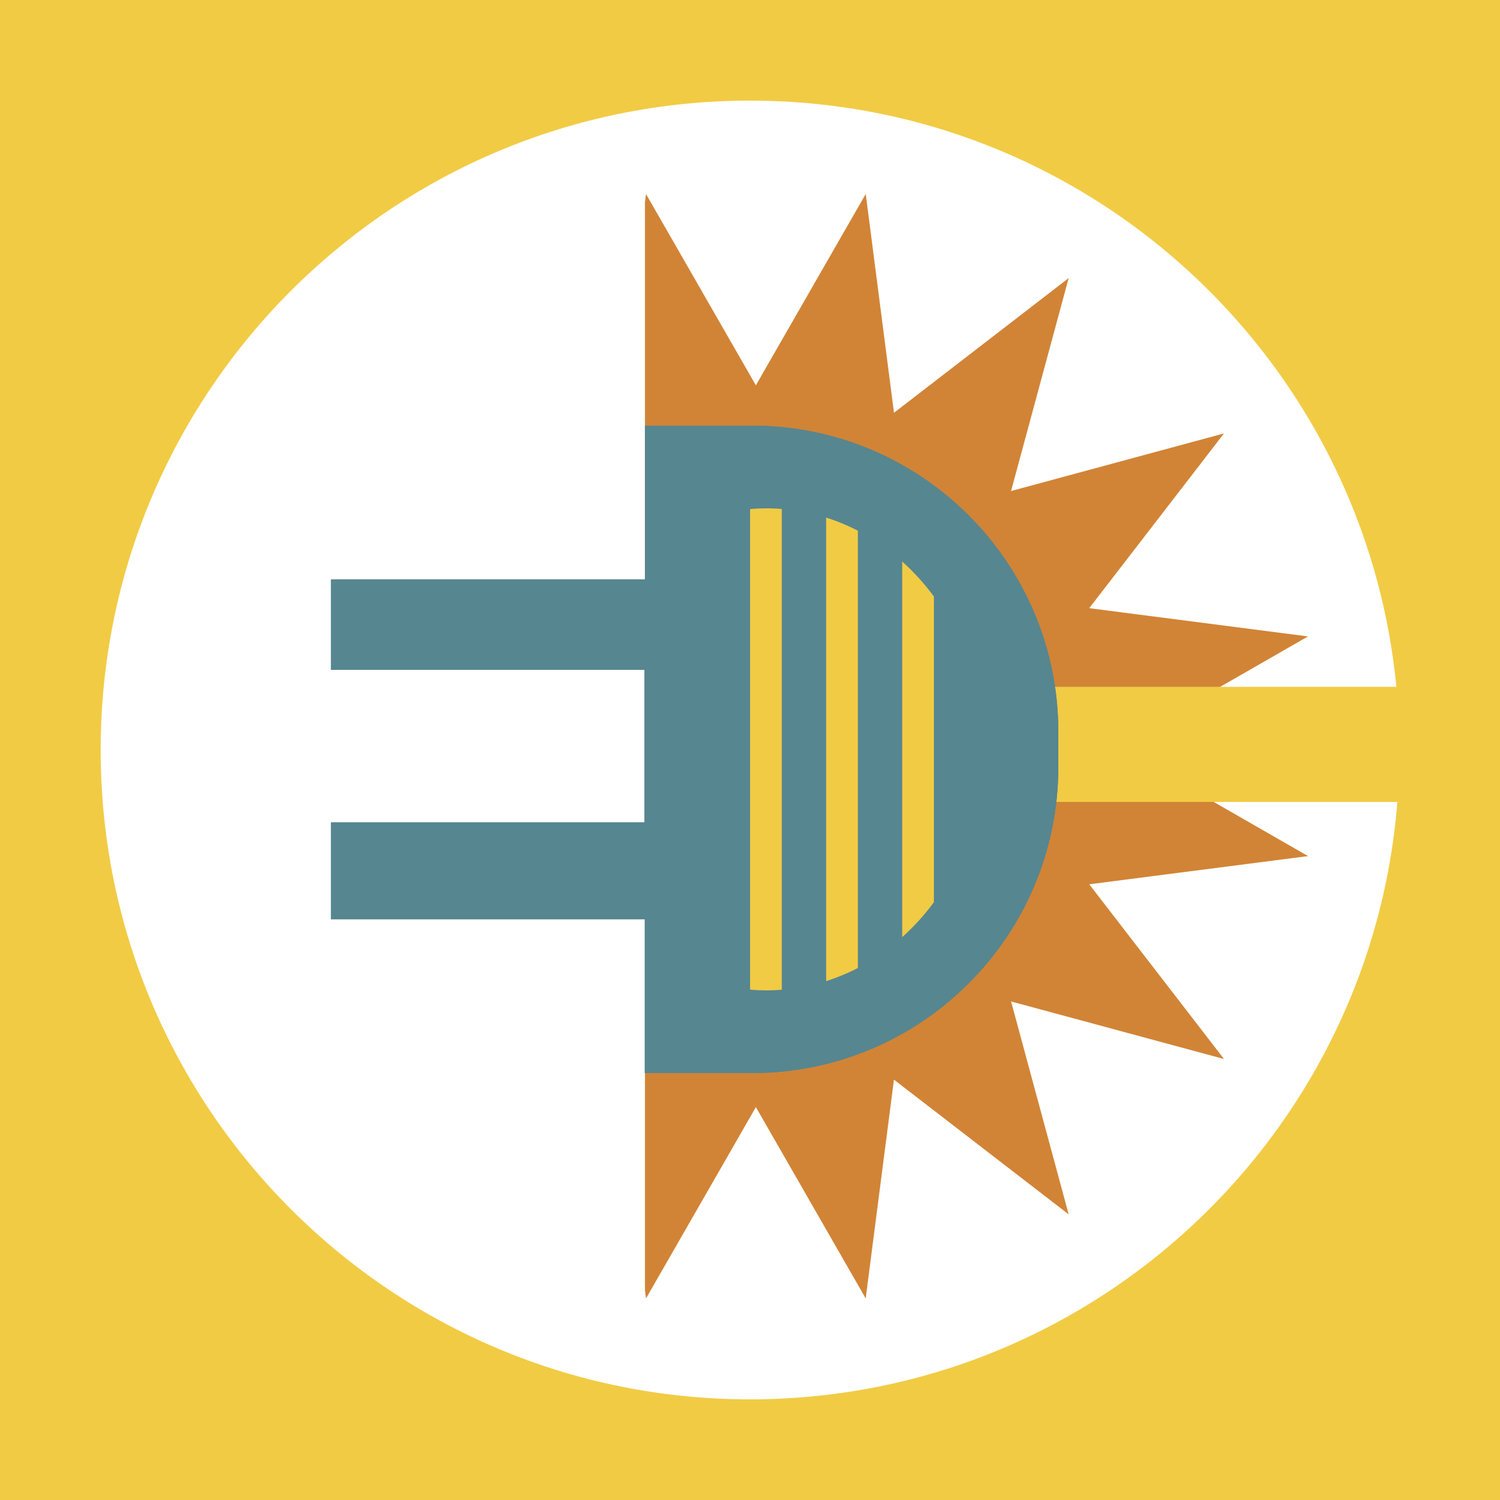 Energize Logo